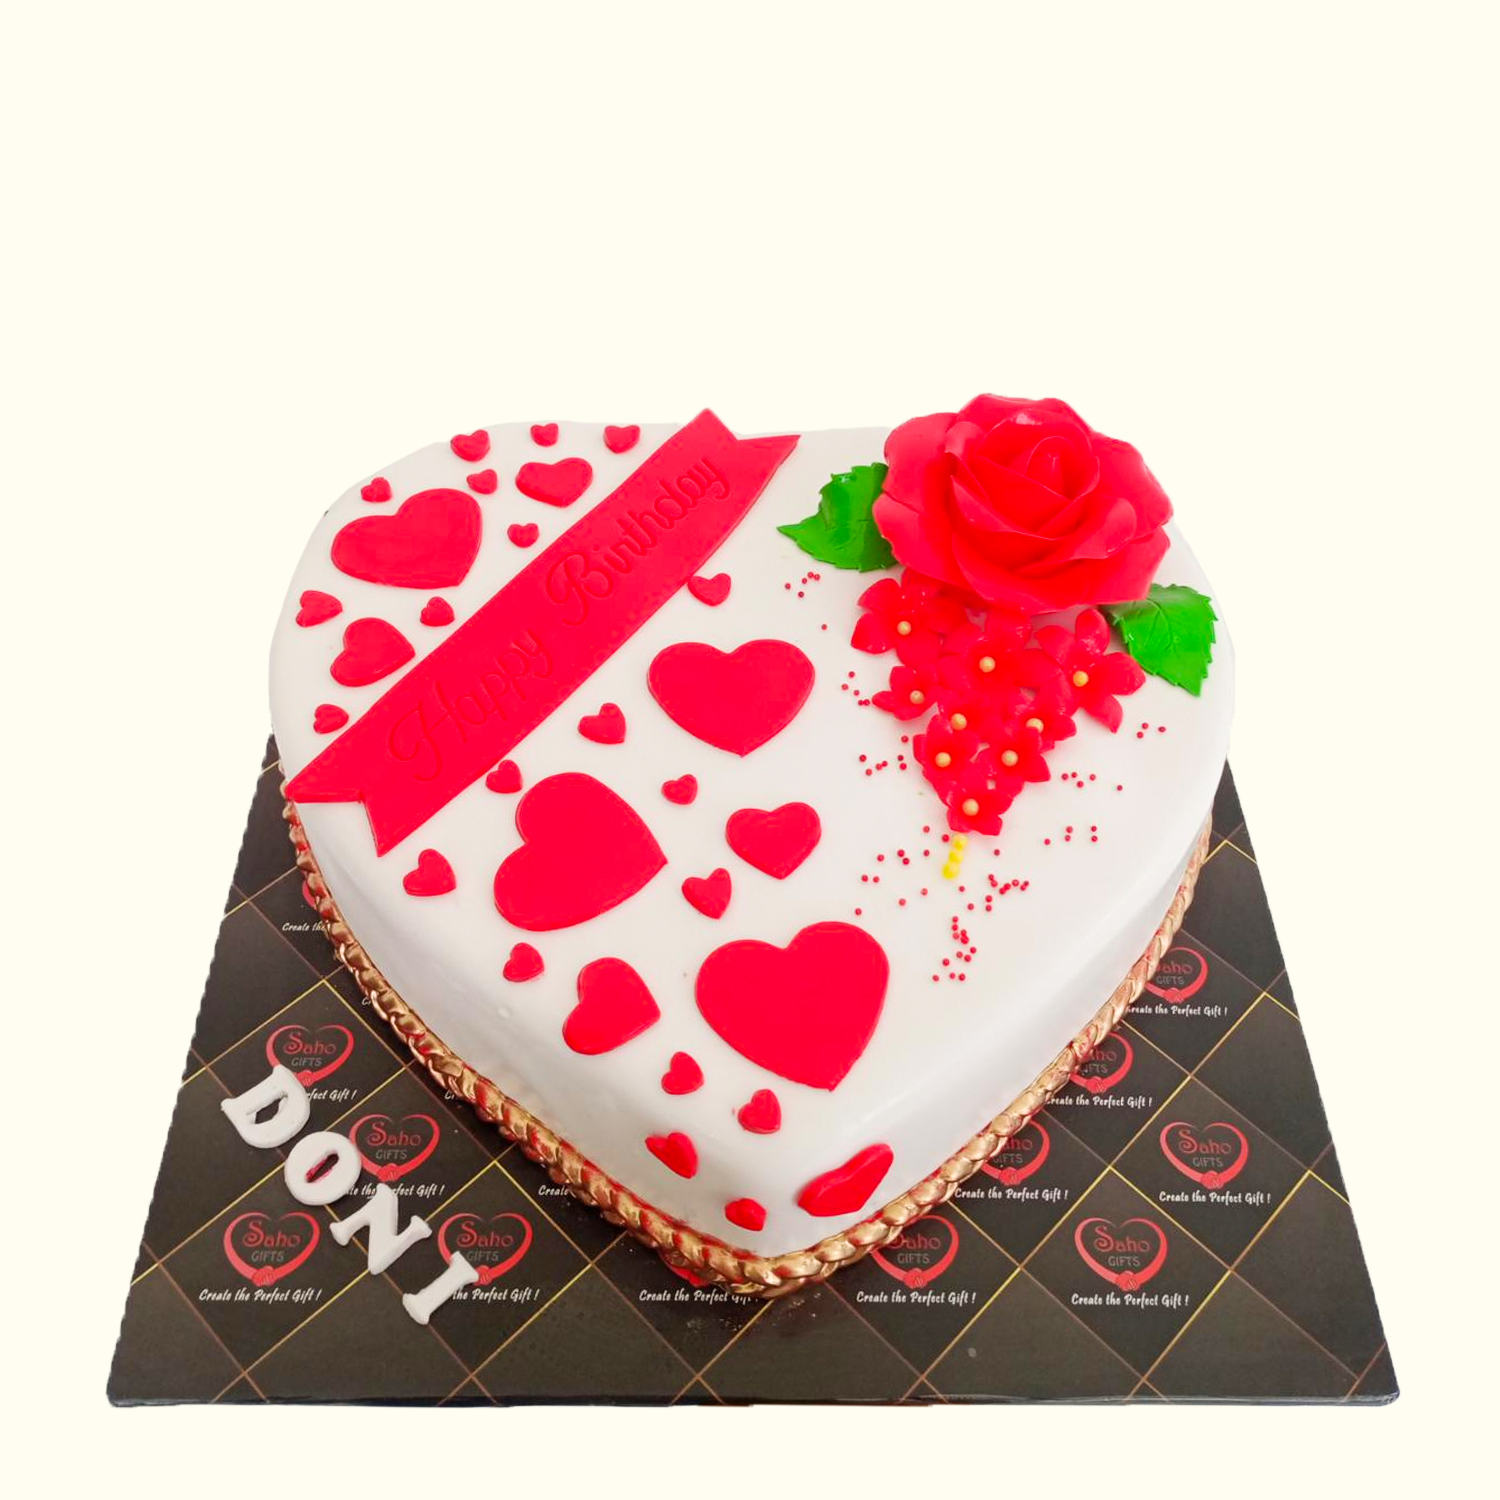 MOU CAKE AND BAKE ᕼOUSE | Facebook